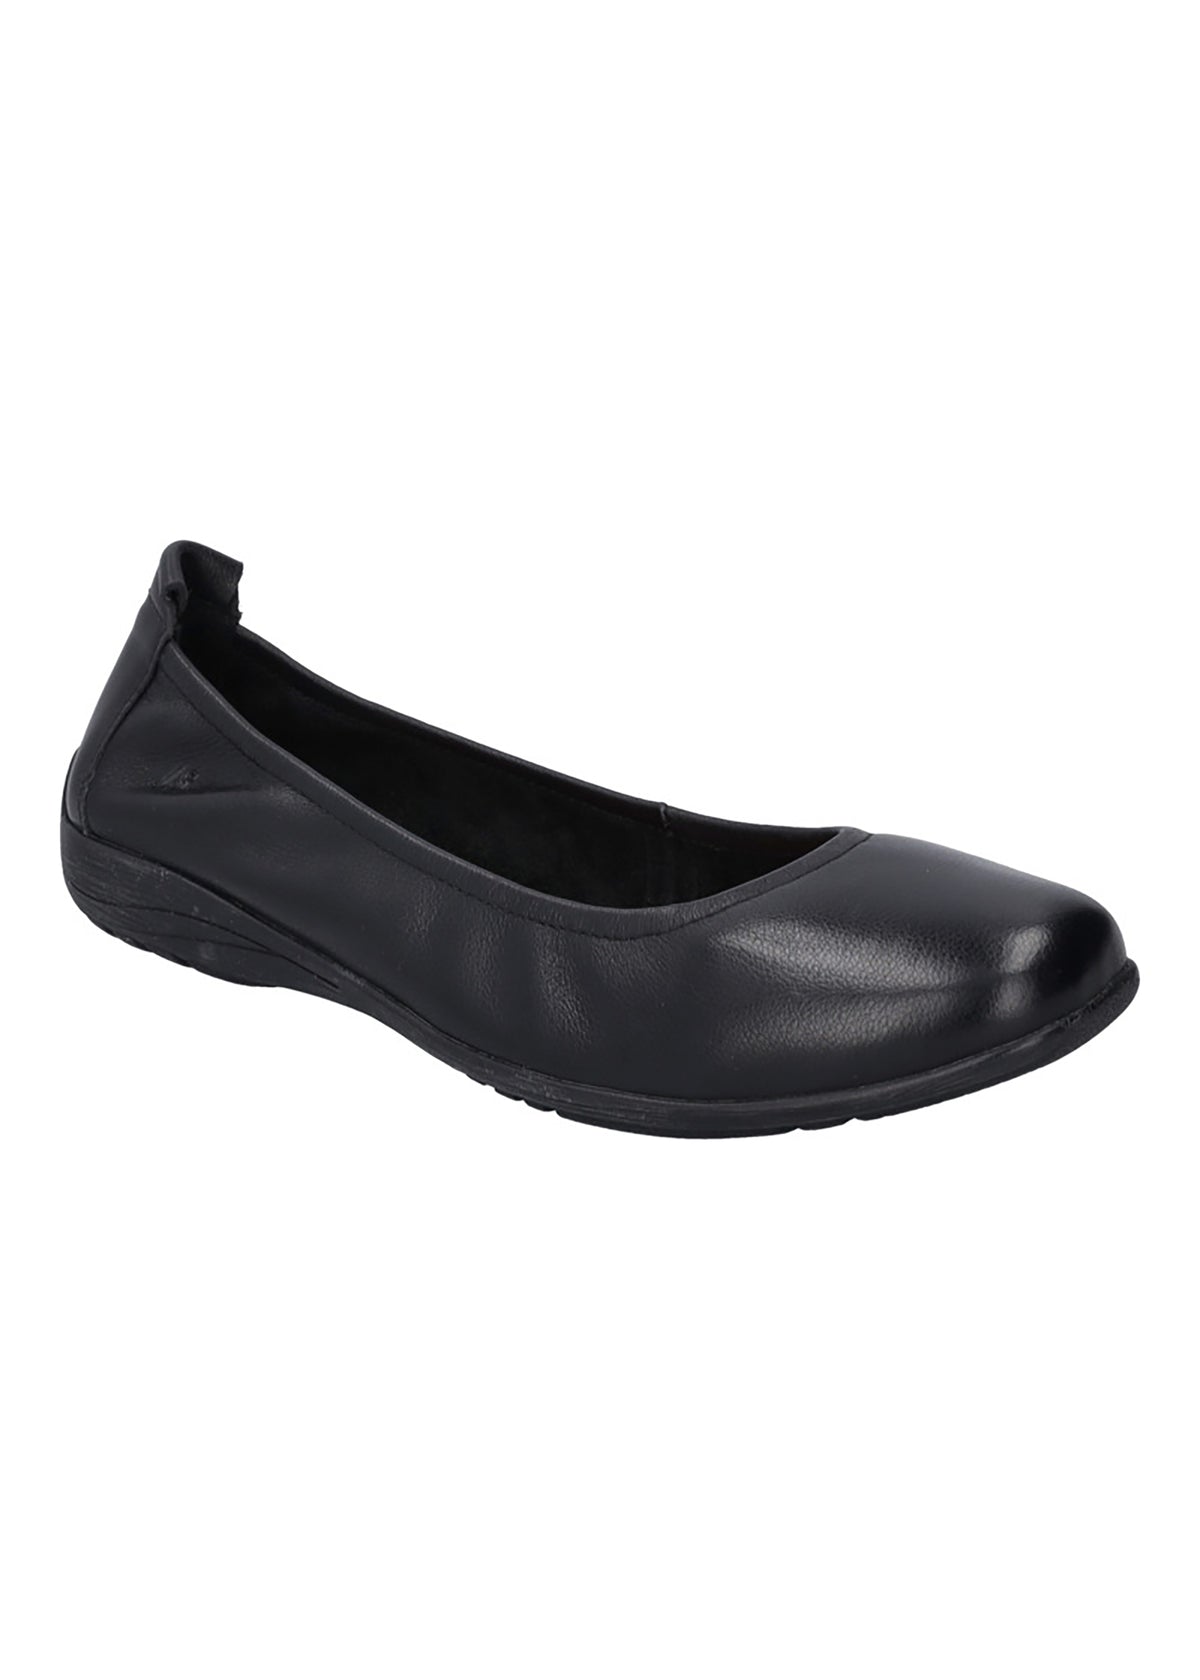 Ballerina shoes - black leather, Fenja 01